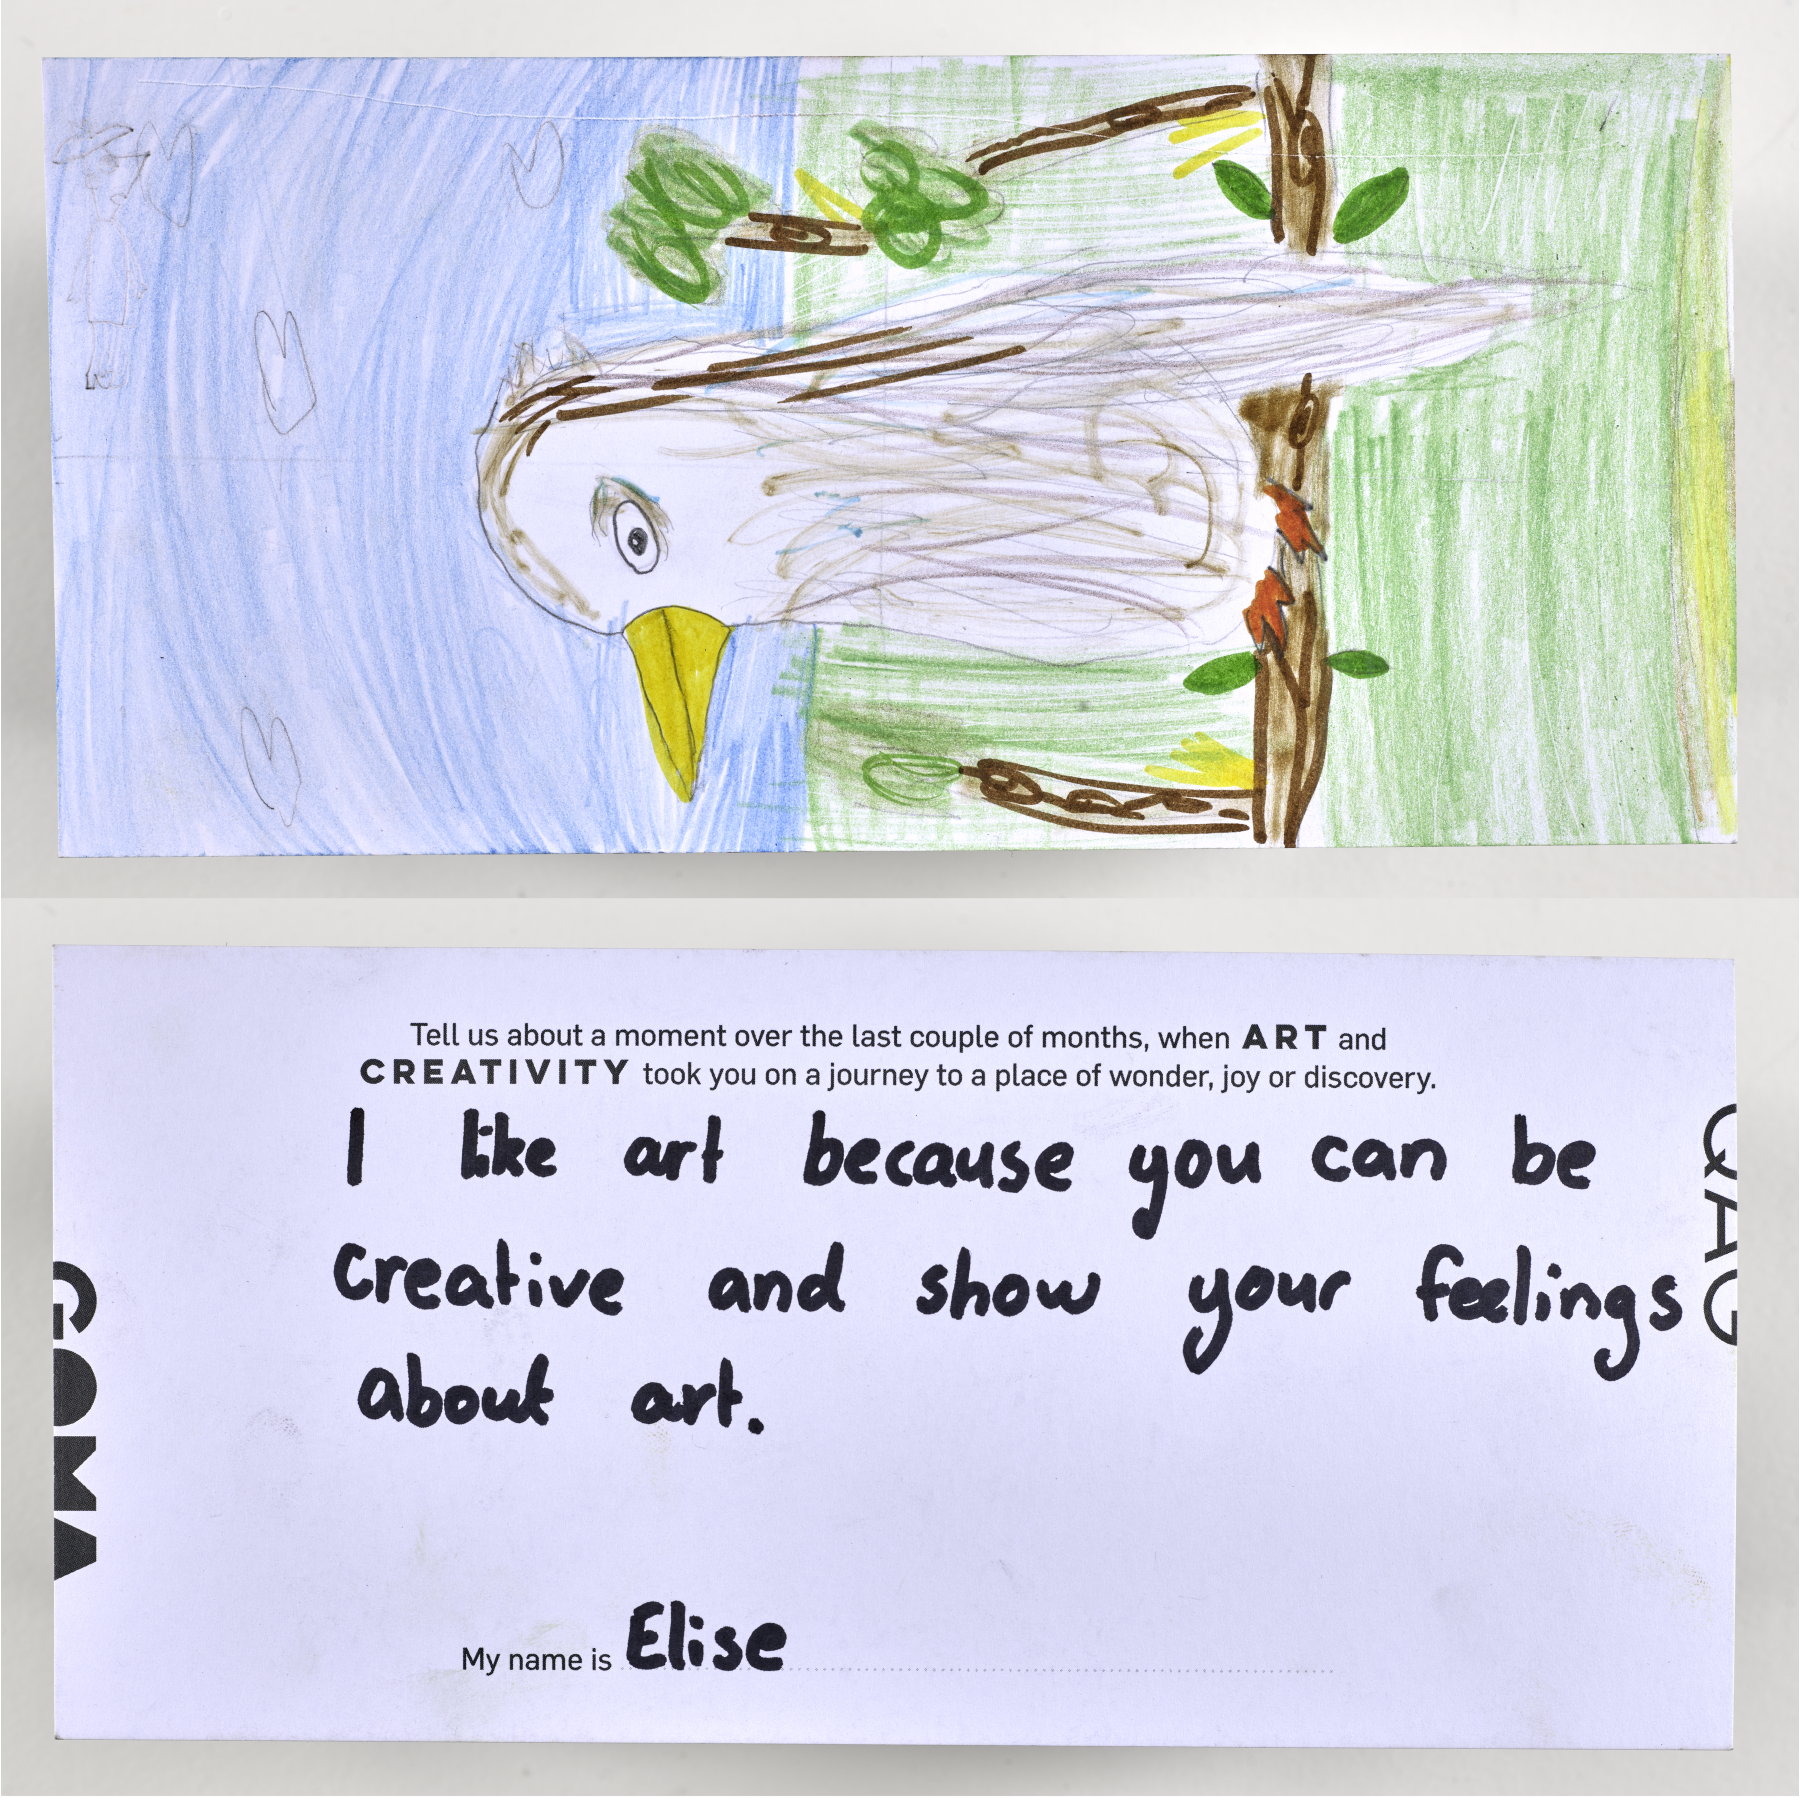 Generated image of the artwork: Elise